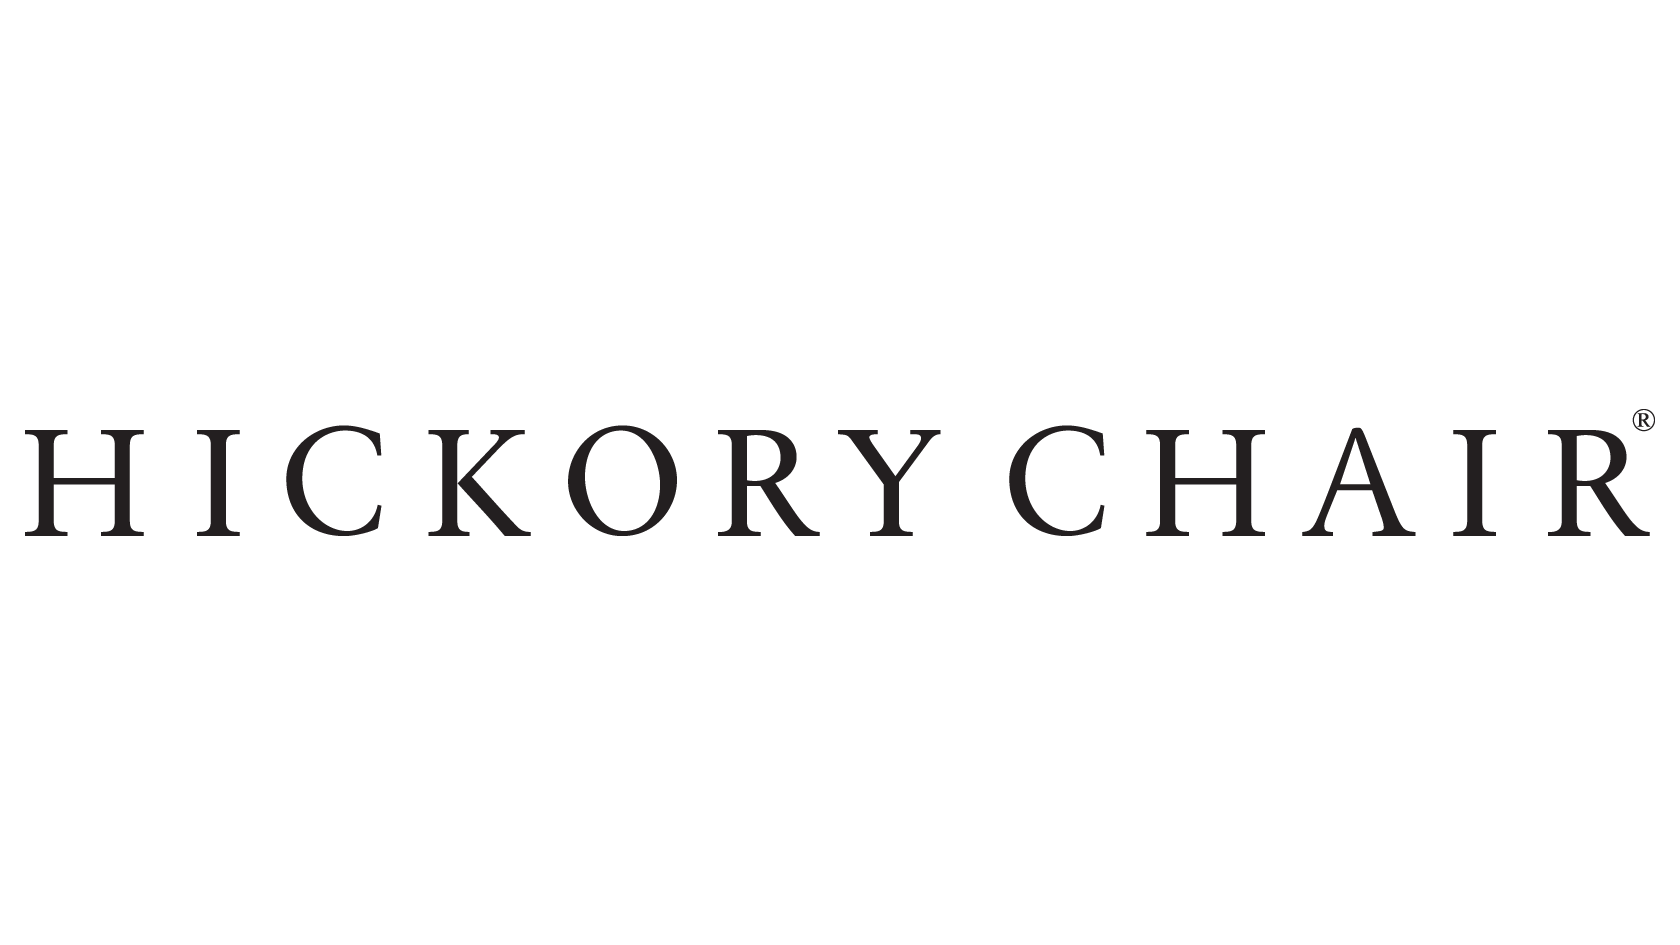 Hickory Chair logo, 2021 Flower magazine showhouse sponsor for furniture